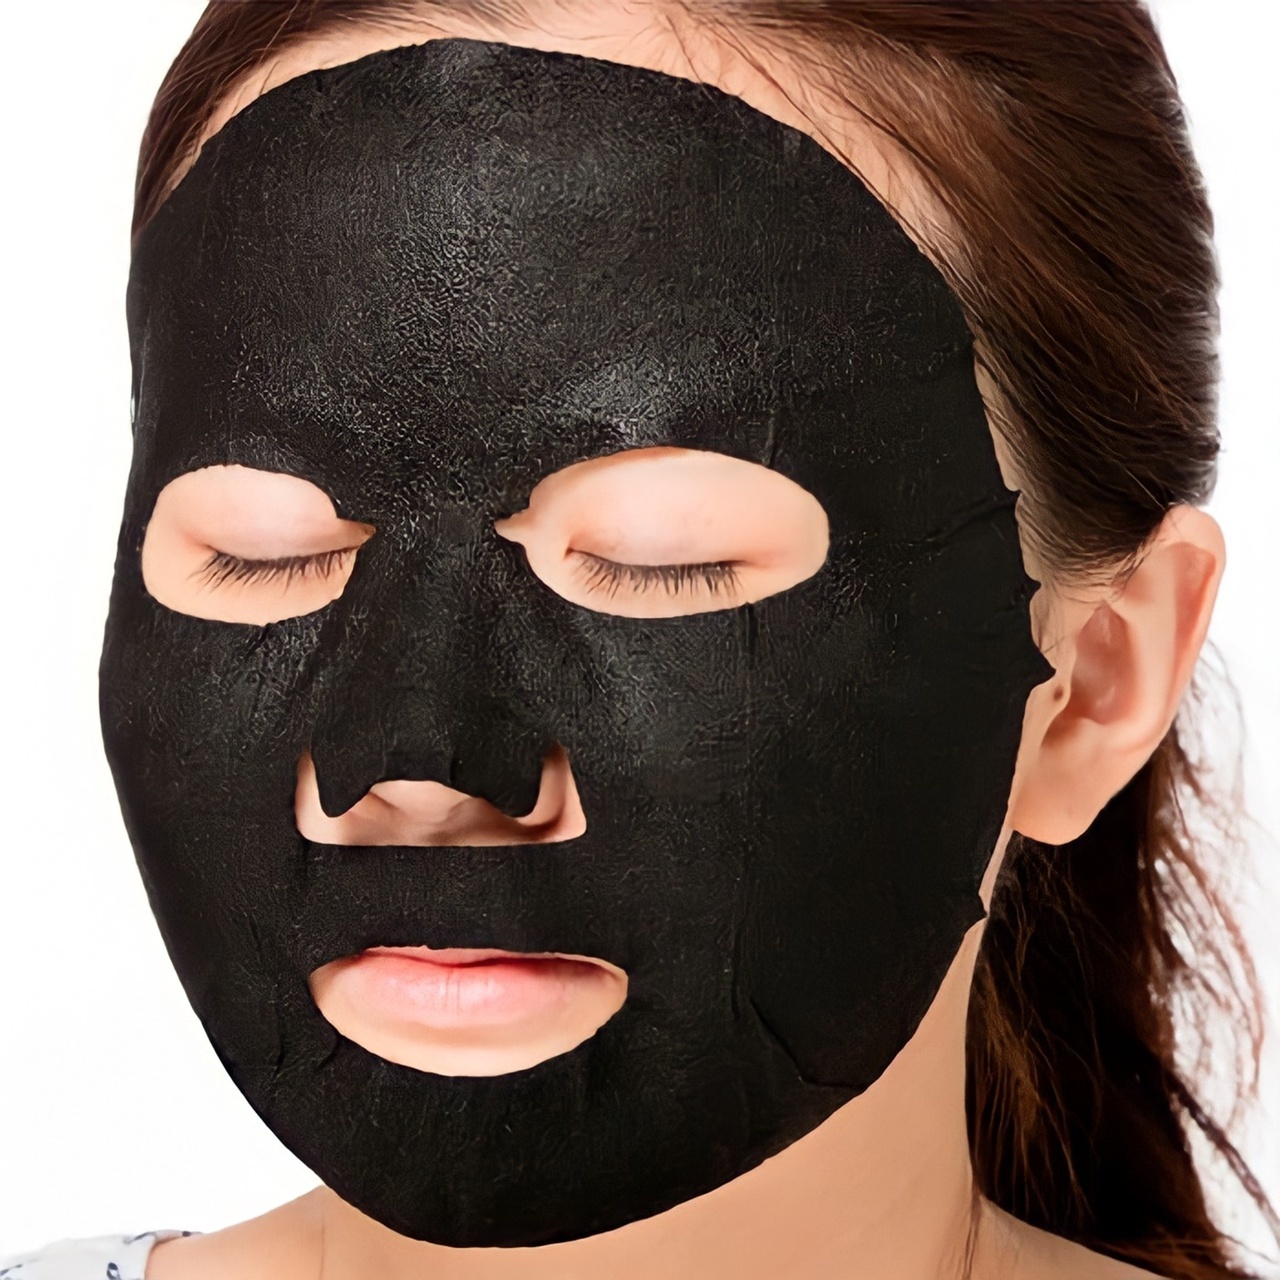 Маска на угле. Маска для лица. Тканевые маски для лица. Матерчатая маска для лица. Маска для лица тканевая чёрная.